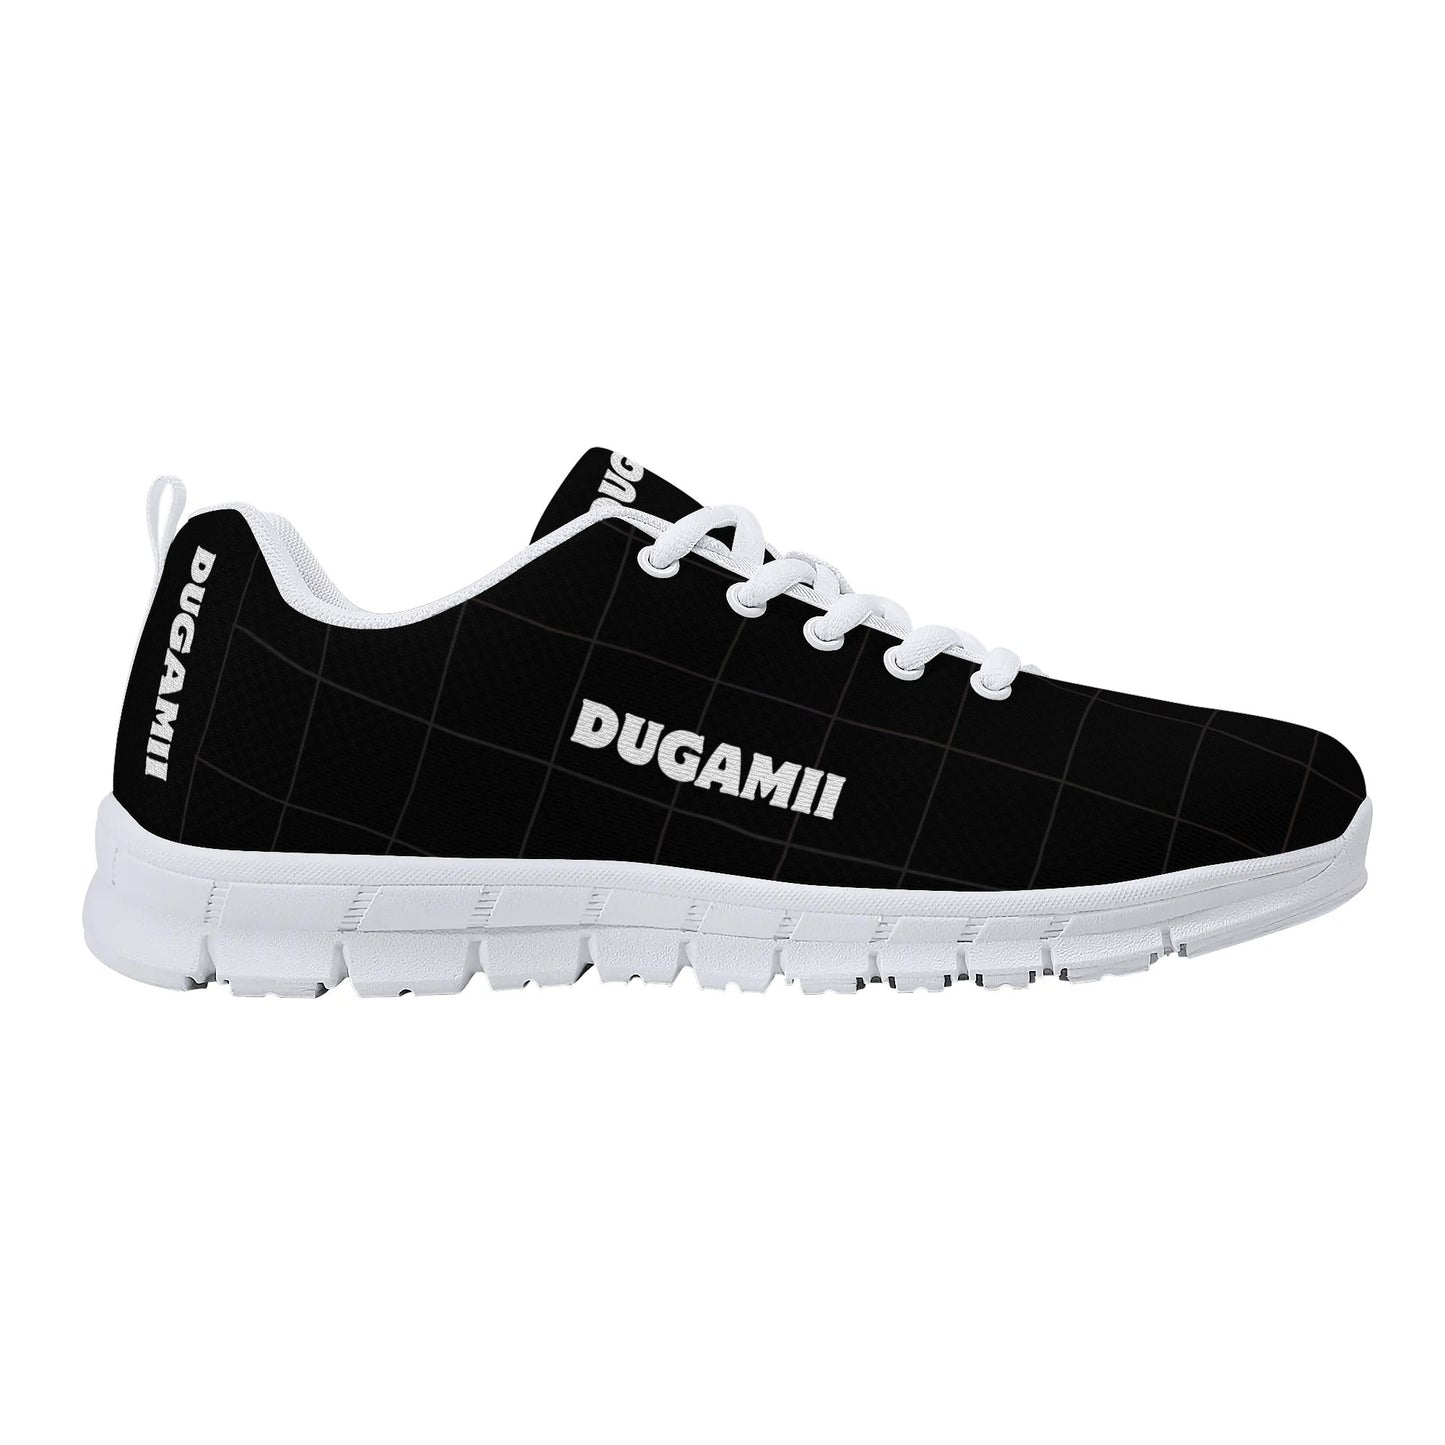 Mens DuGamii Signature Black Mesh Running Shoes